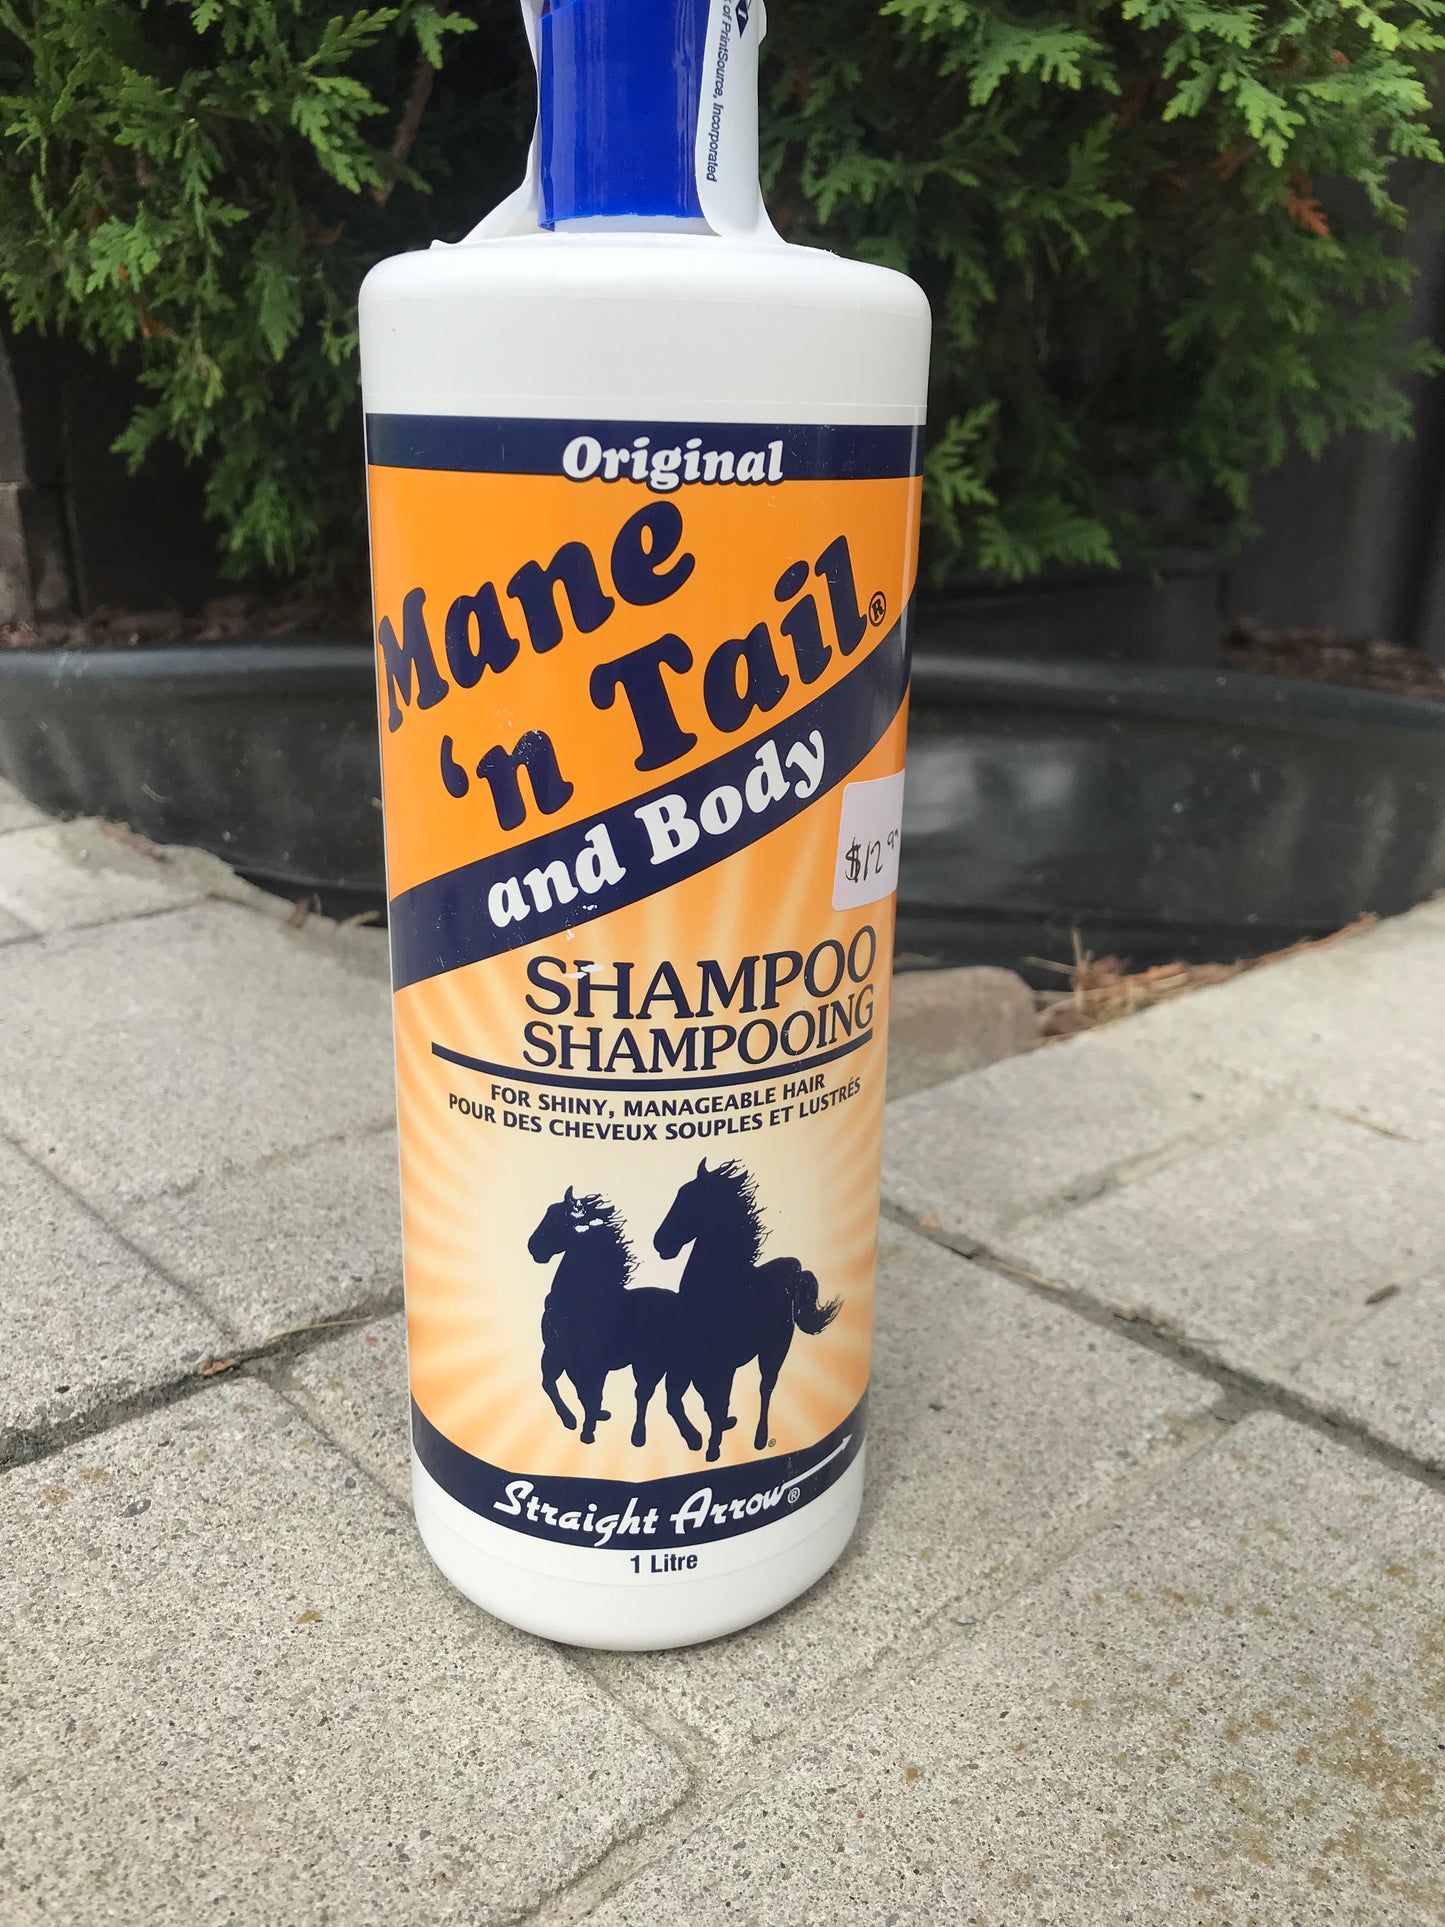 Mane n tail and body shampoo